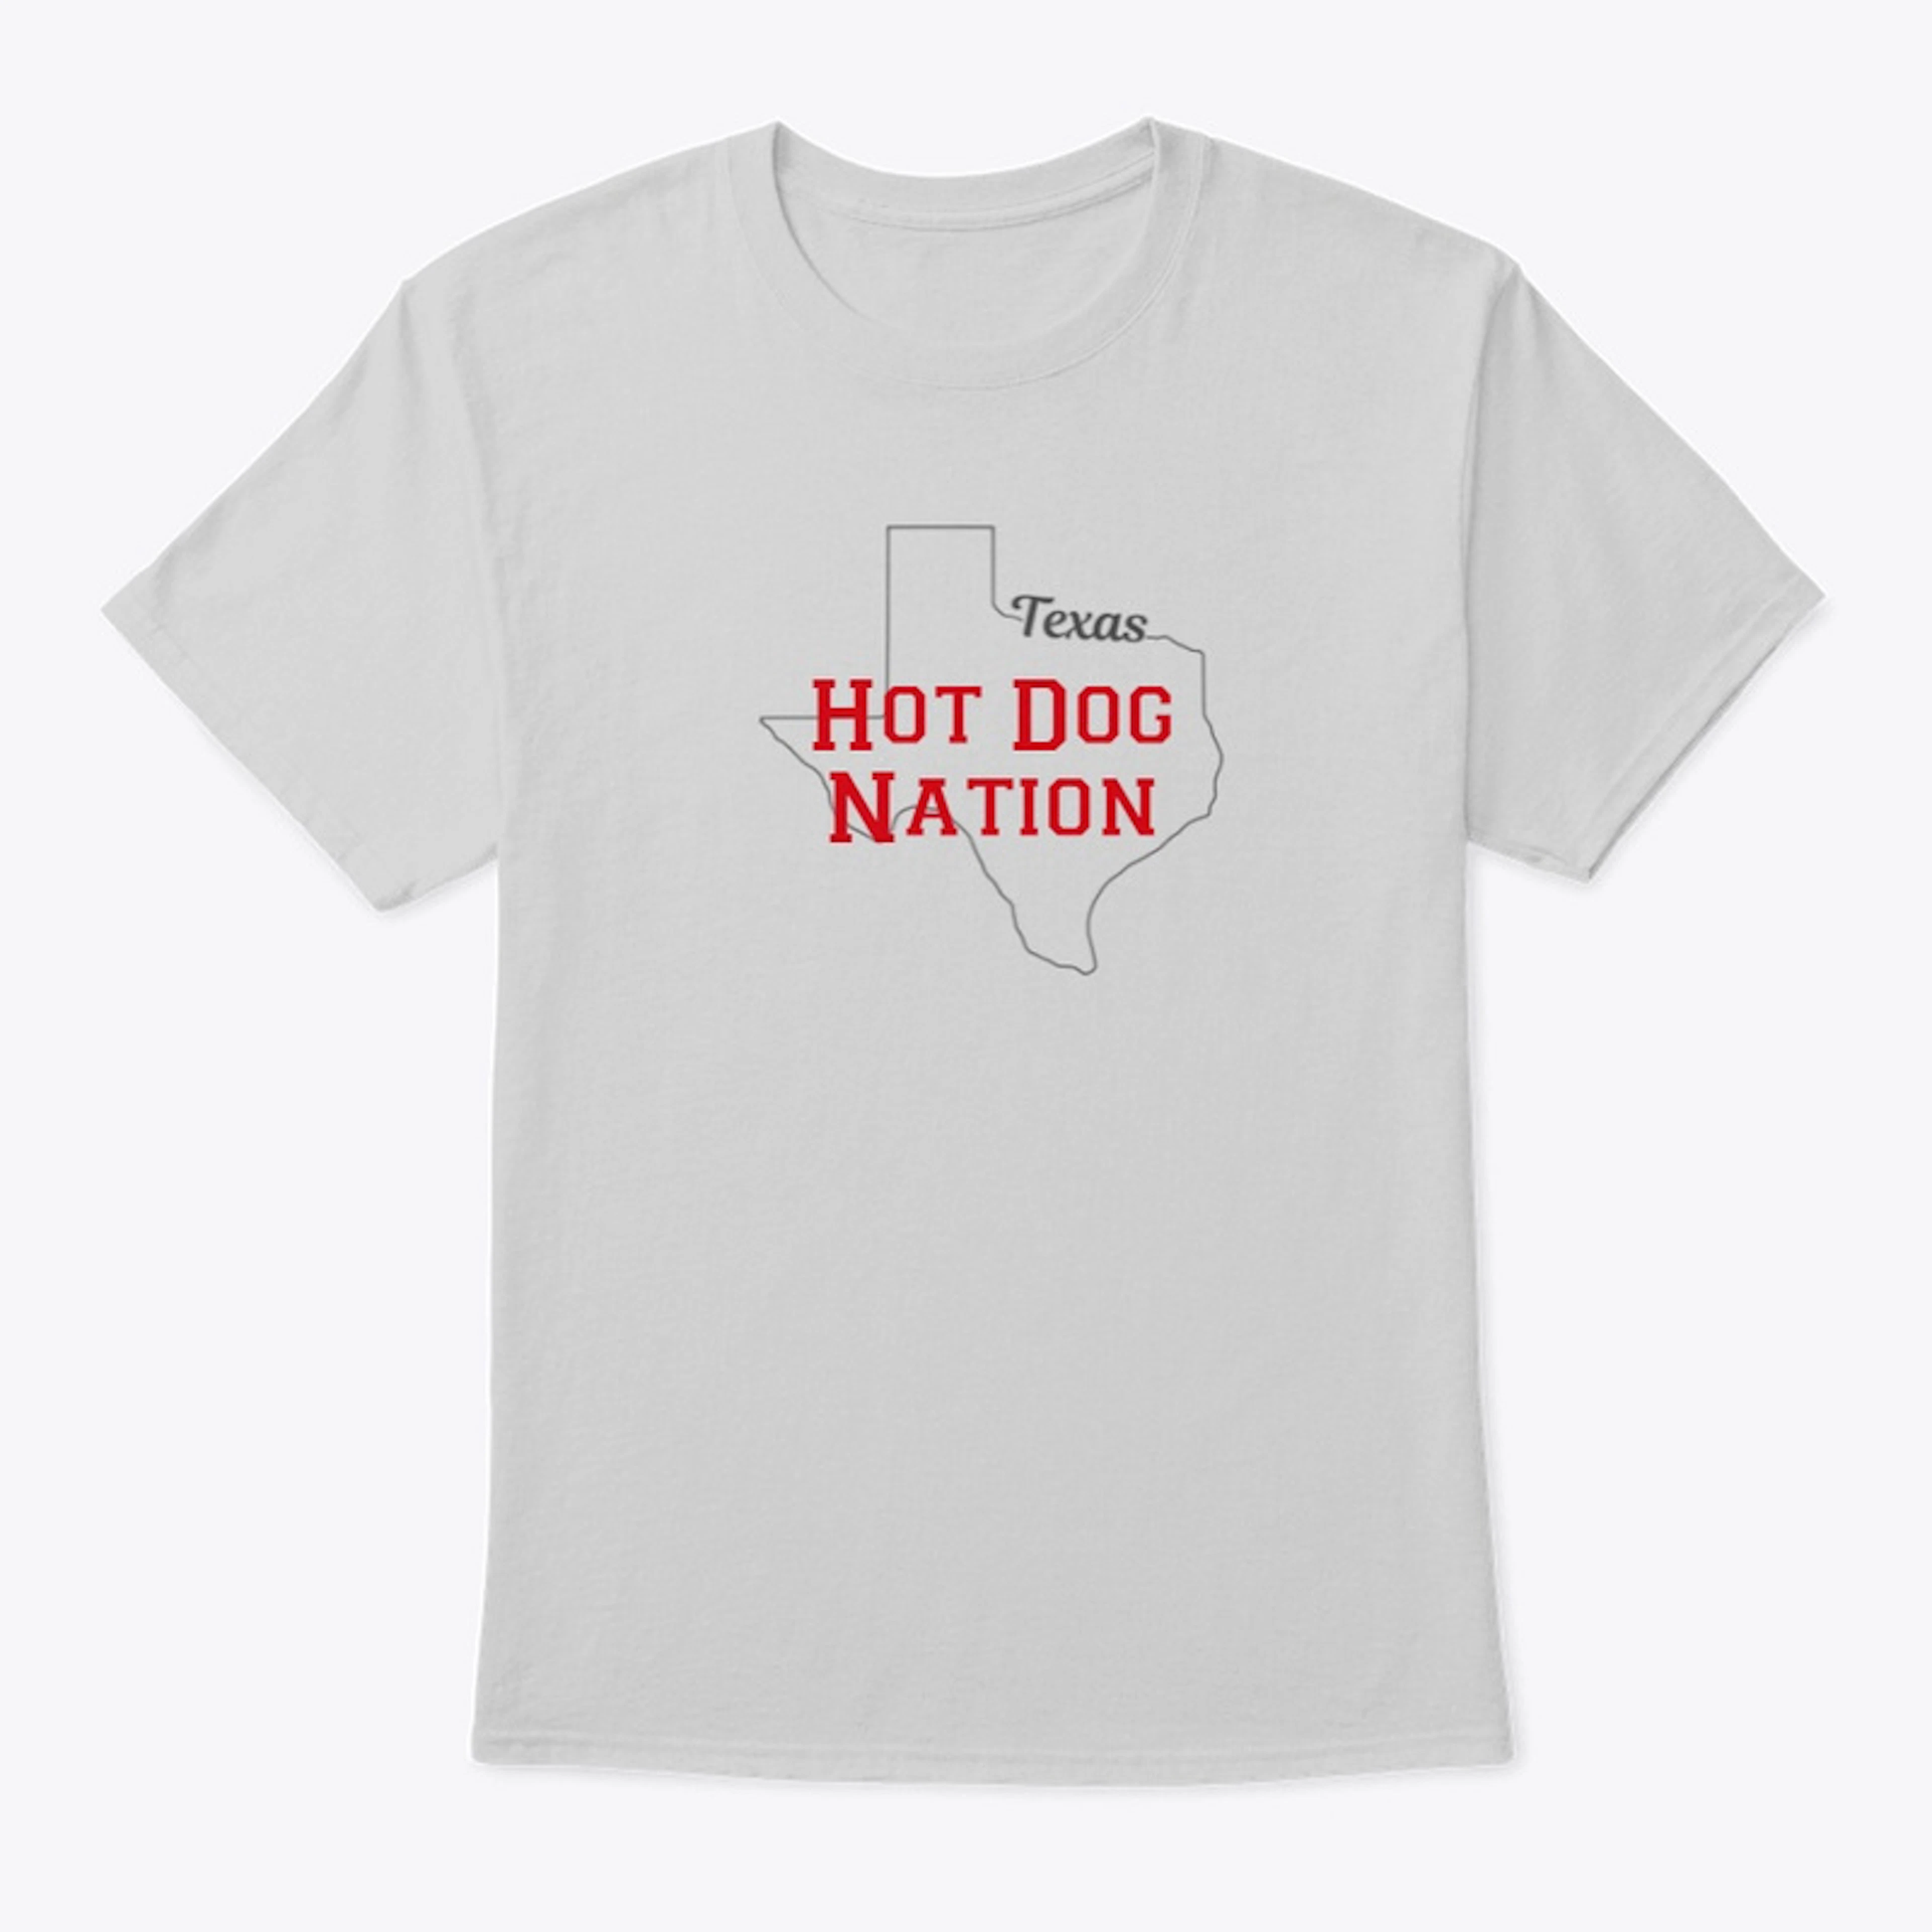 Hot Dog Nation - Texas